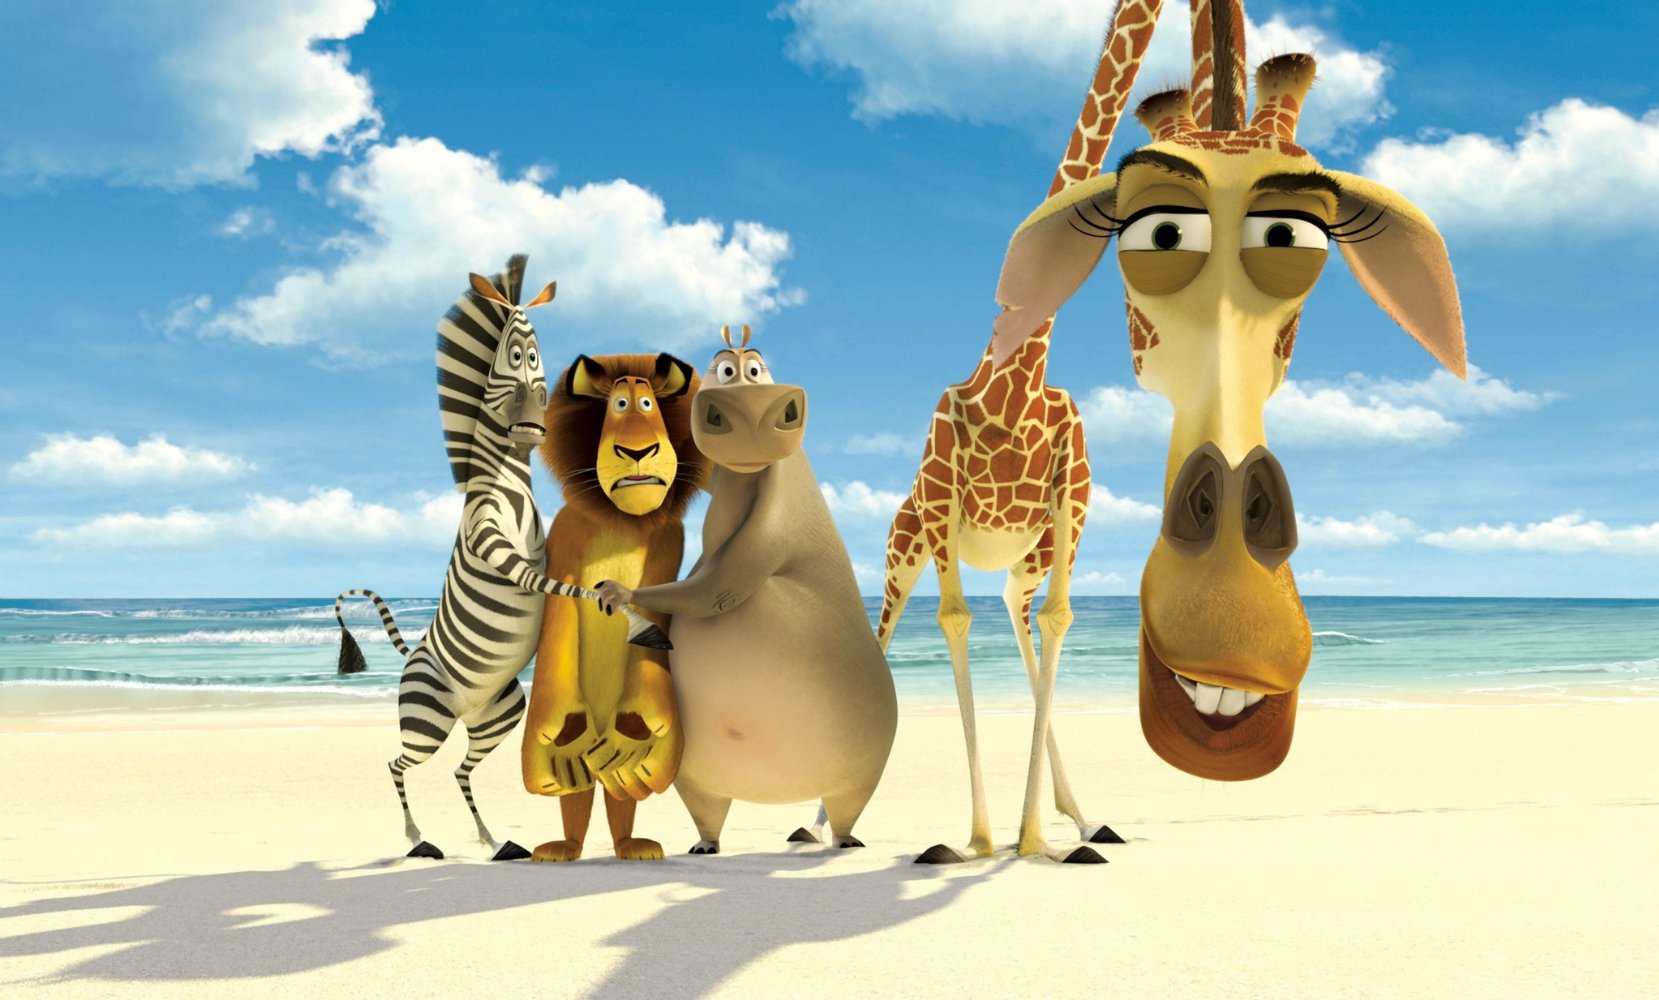 Madagascar 5 Ist Ein Sequel In Planung